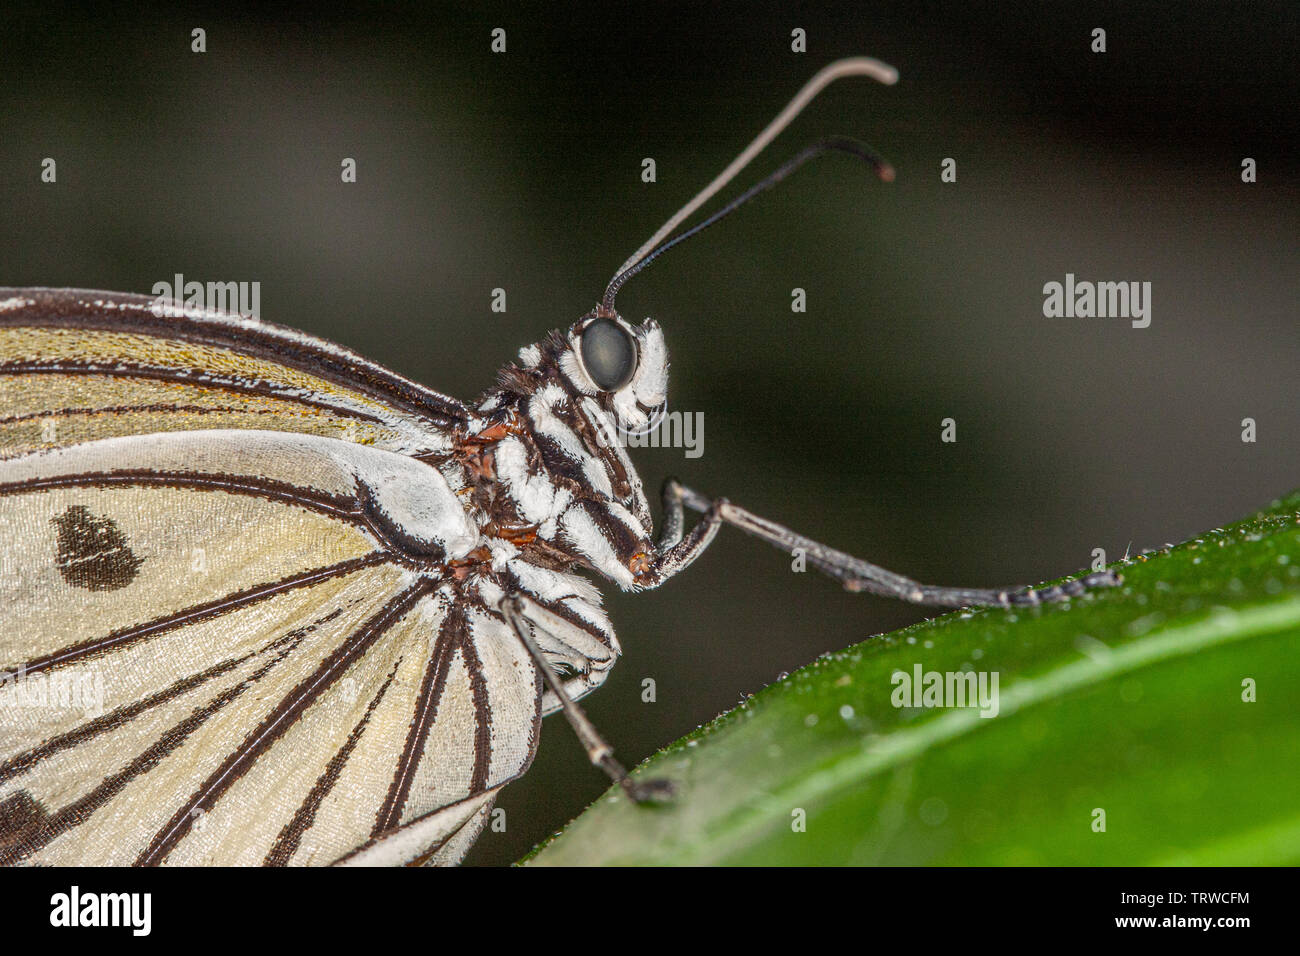 Reispapier Schmetterling (Idee Leuconoe) Stockfoto